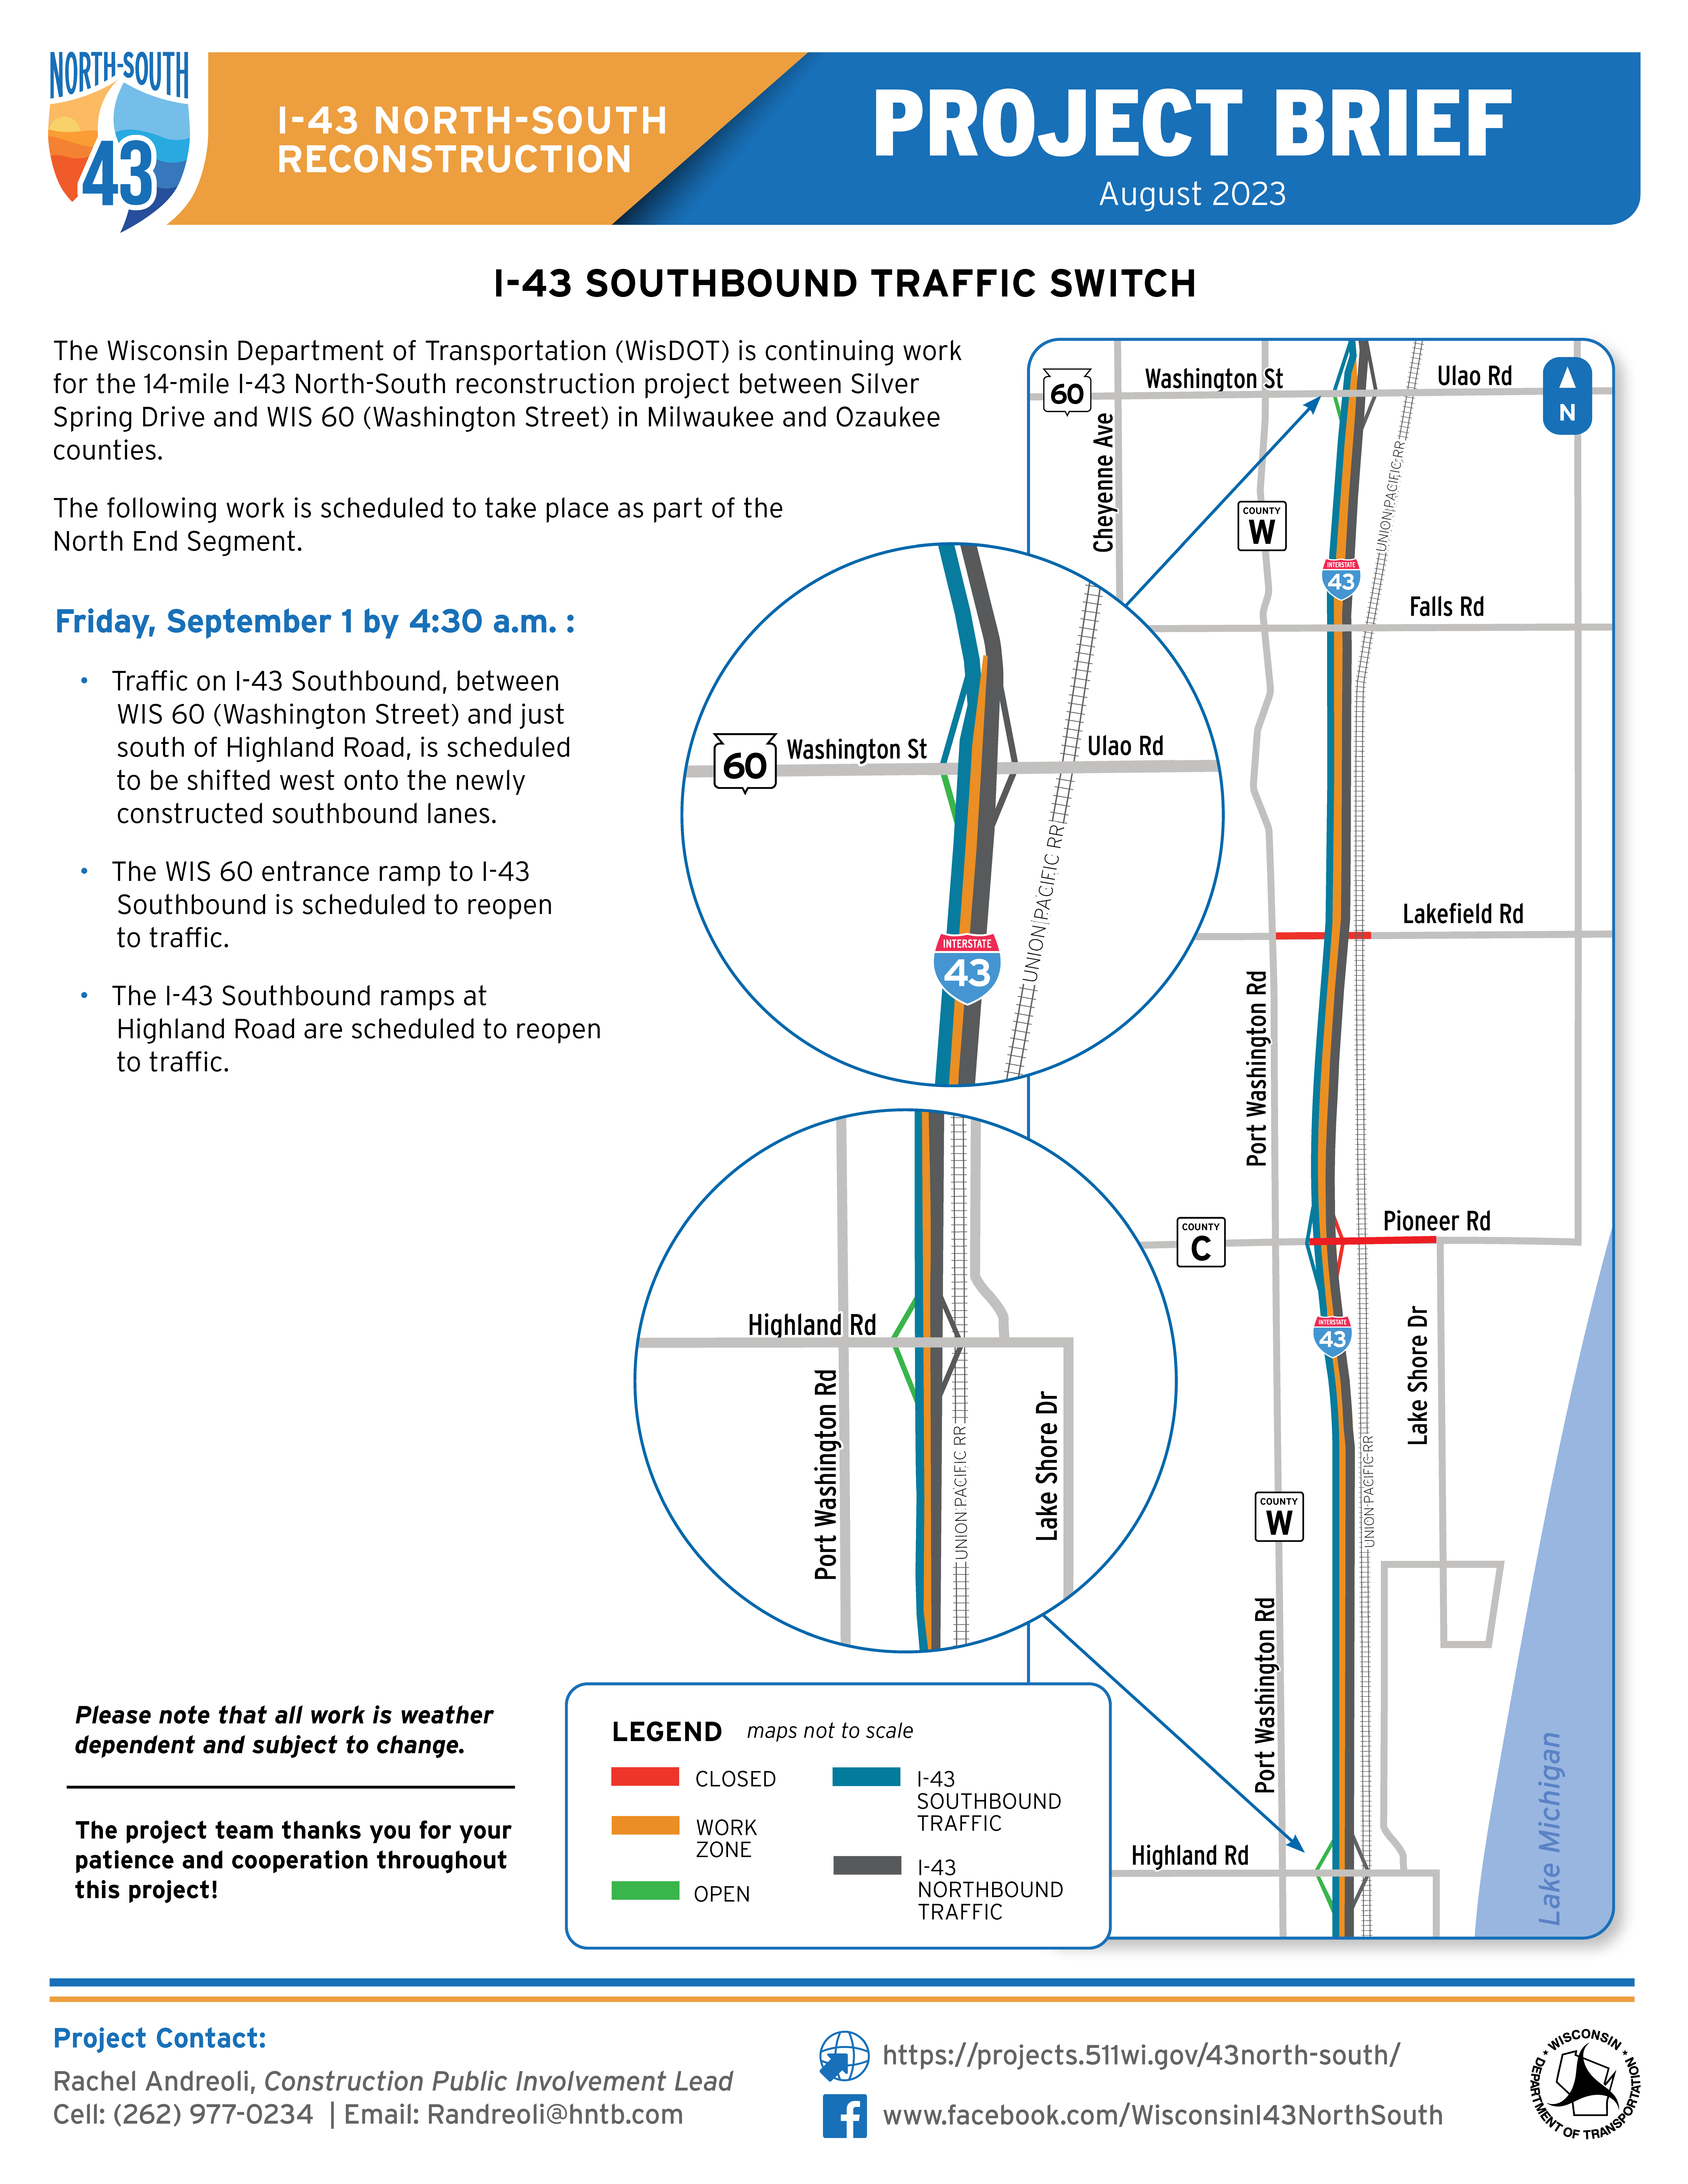 September 1, I-43 Southbound Traffic Switch